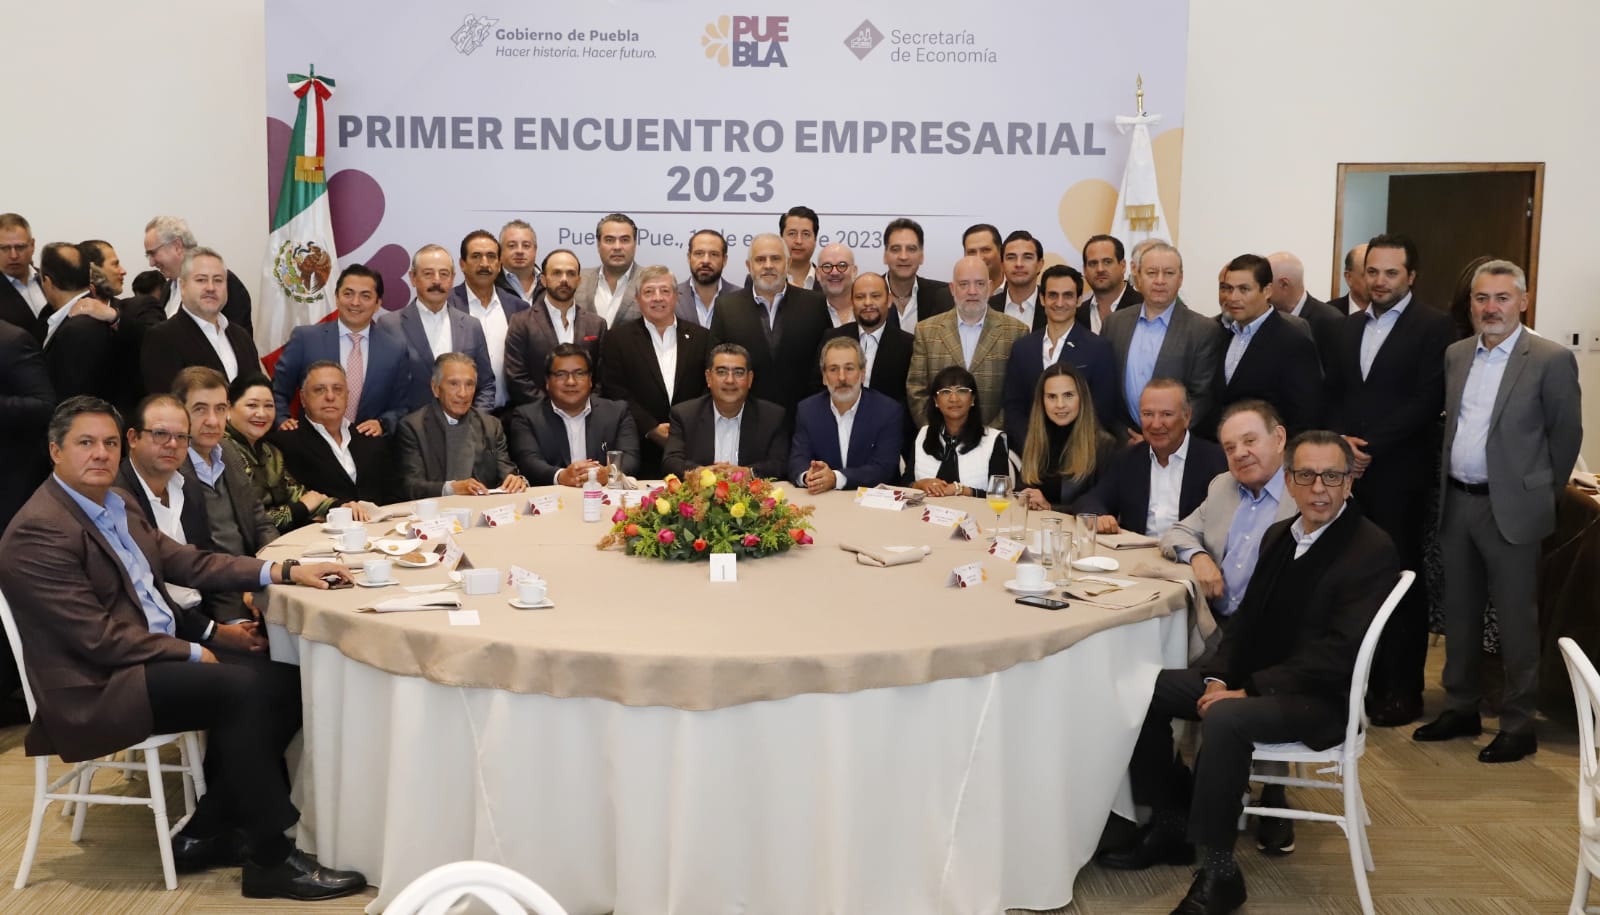 Fotonota: Gobernador Sergio Salomón Céspedes Peregrina presidió el Primer Encuentro Empresarial 2023